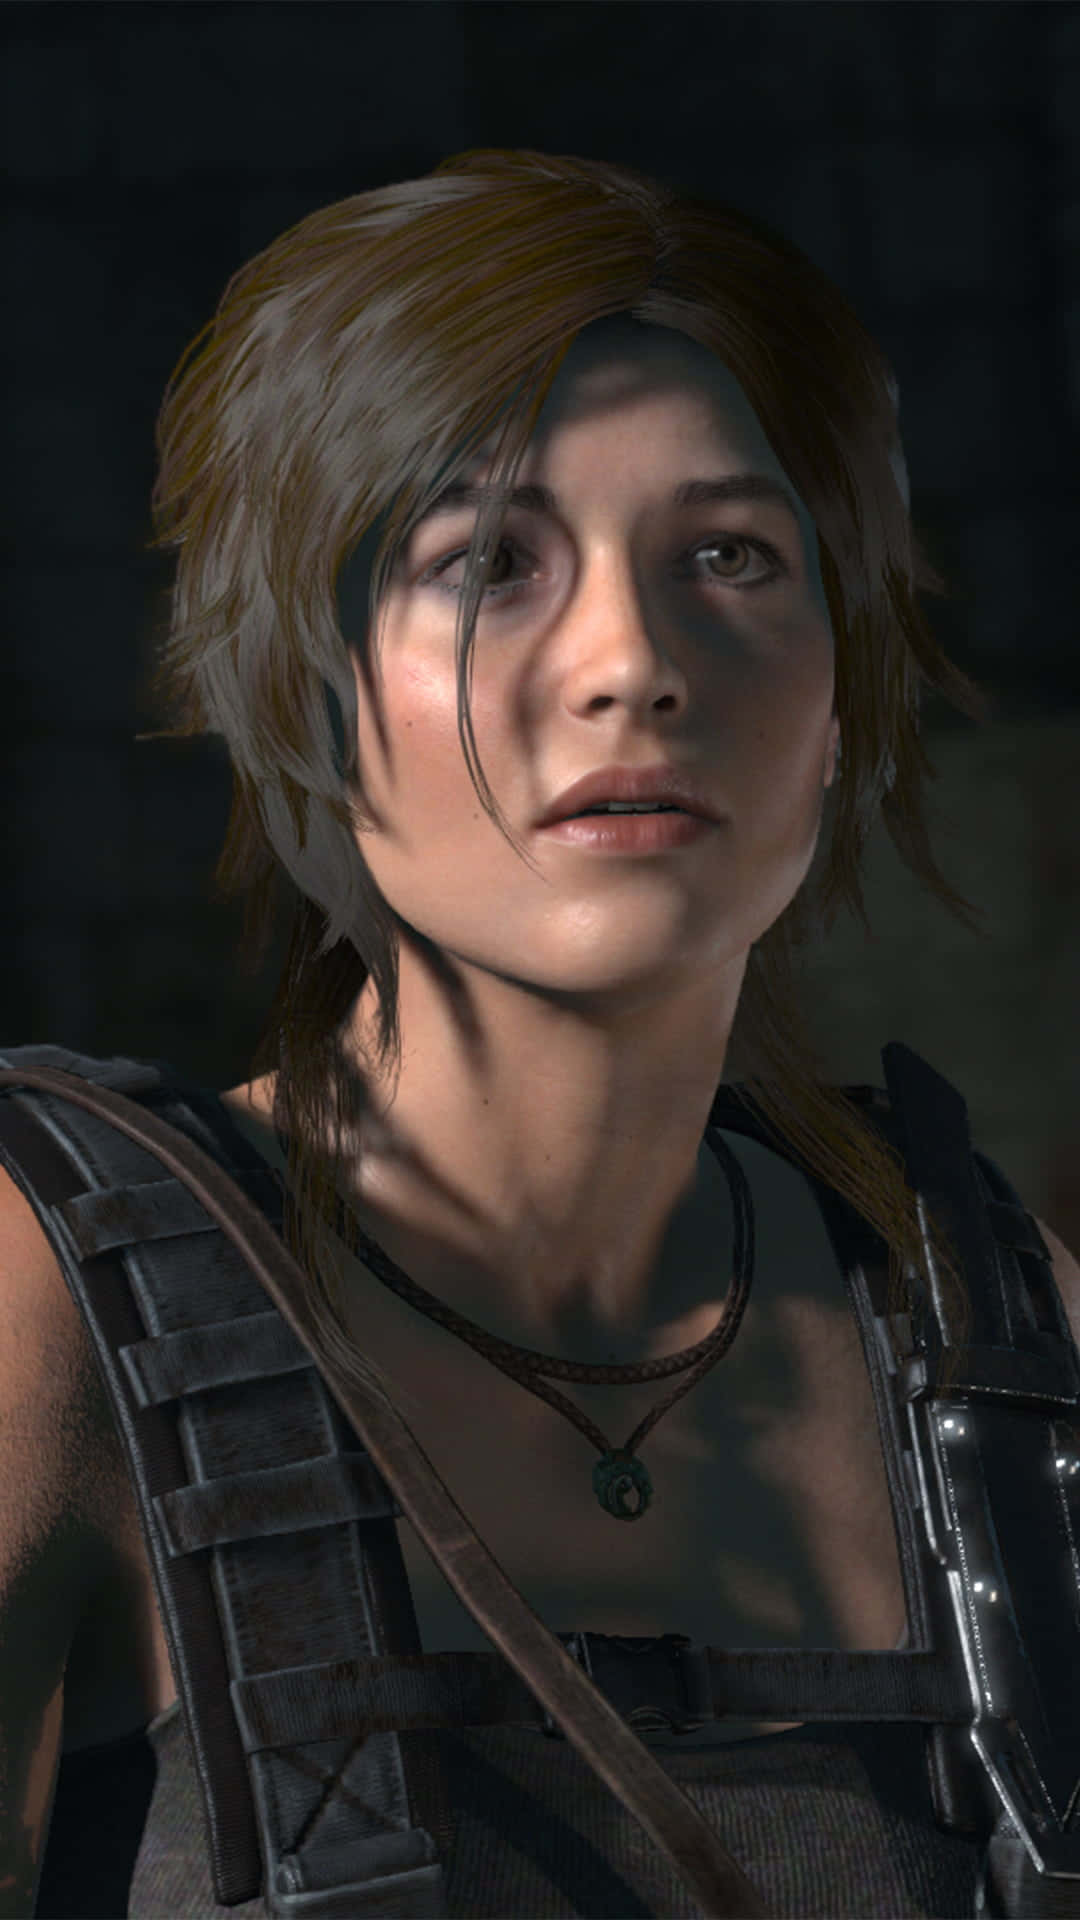 Androidrise Of The Tomb Raider Bakgrund Chockad.